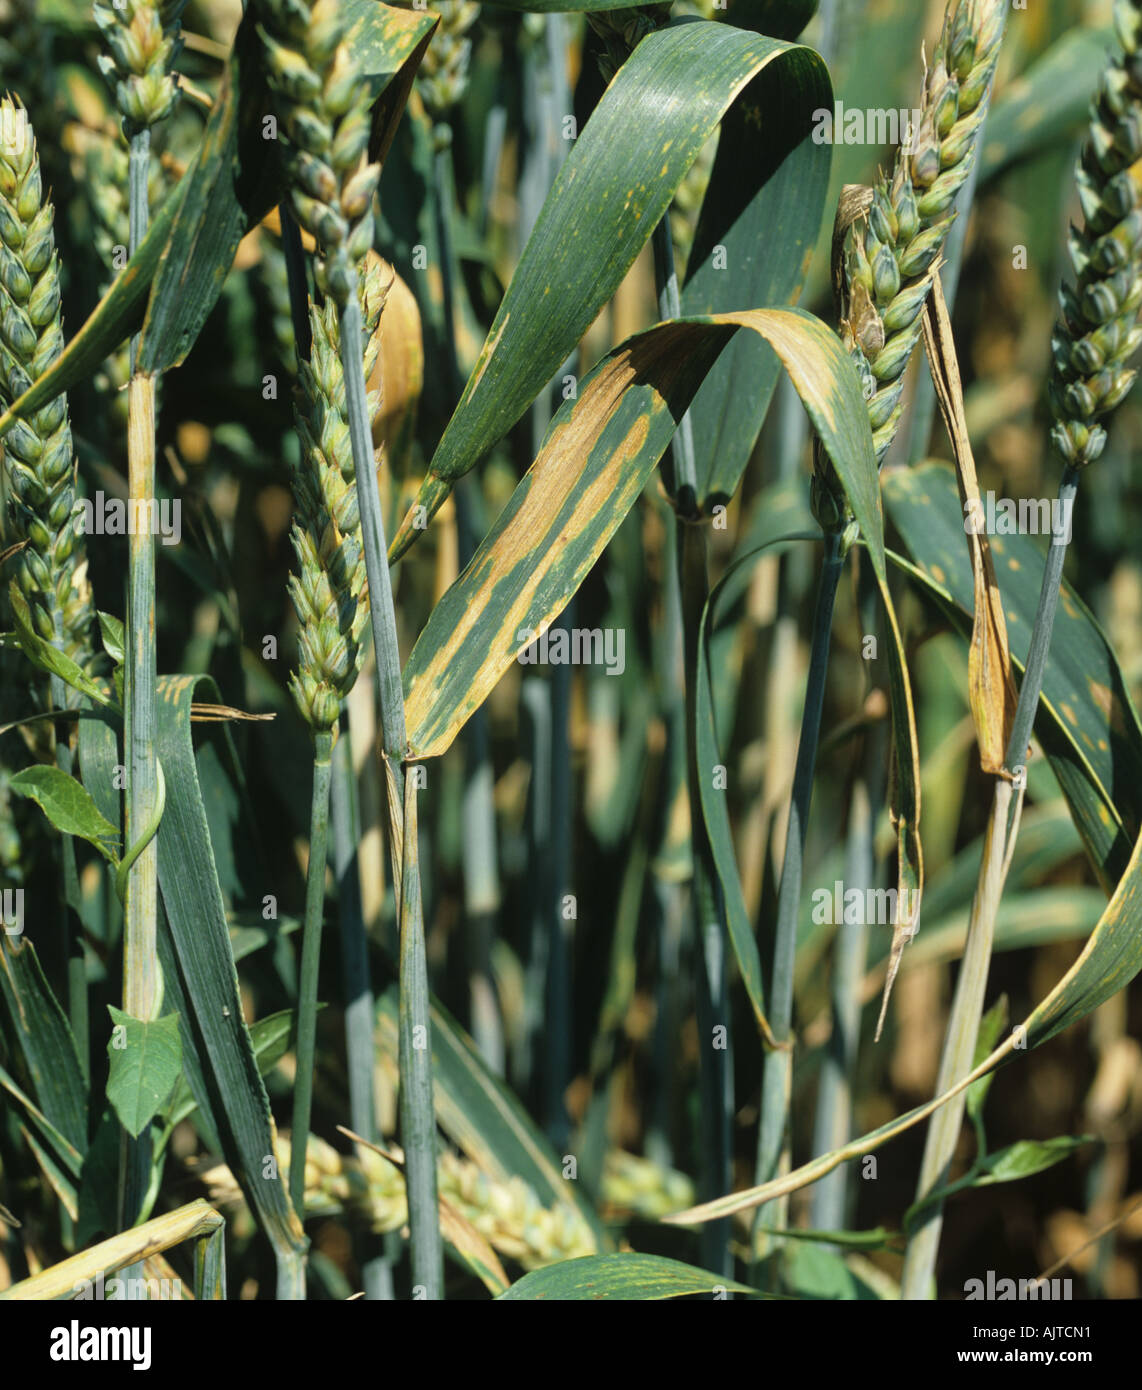 Septoria foglia macchia (Phaeosphaeria nodorum) lesioni sulle foglie superiori di grano maturante Foto Stock